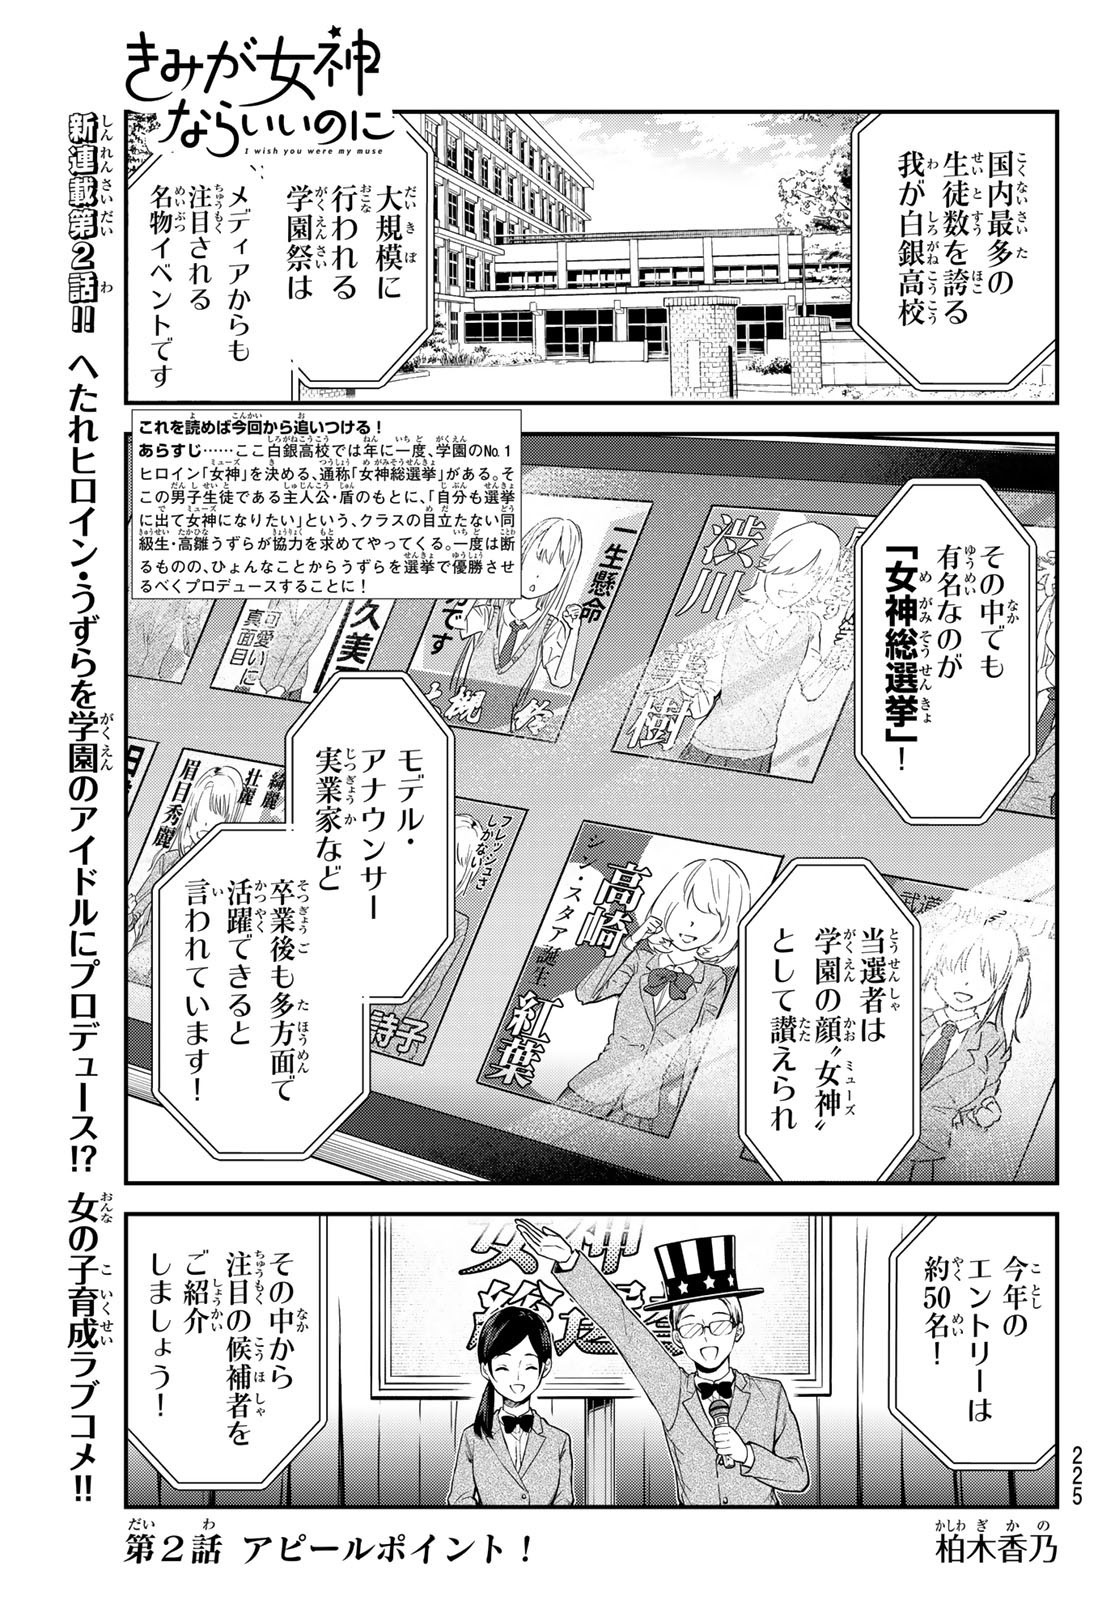 Kimi ga Megami Nara Ii no ni (I Wish You Were My Muse) - Chapter 002 - Page 1